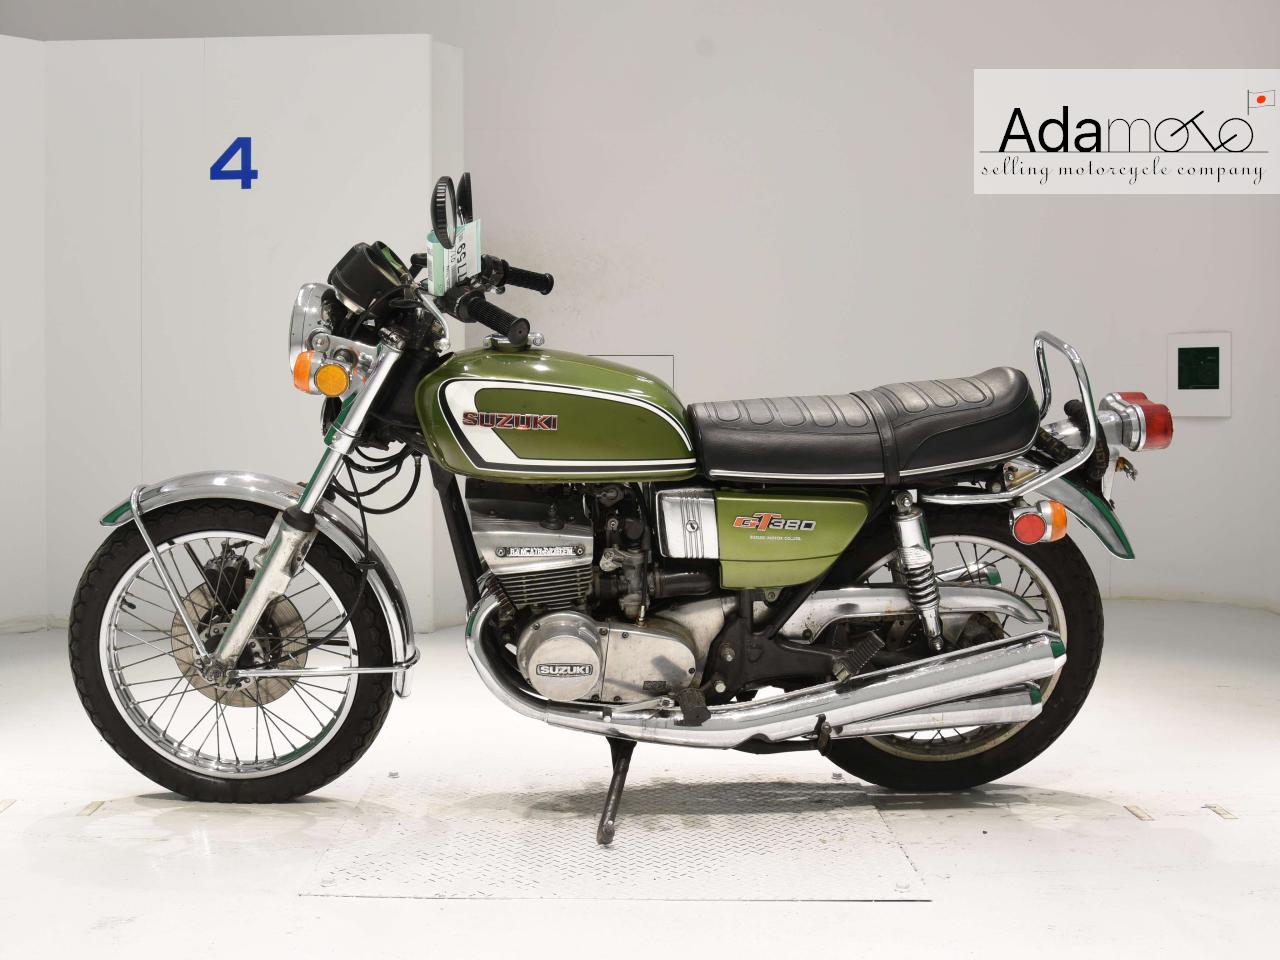 Suzuki GT380 - Adamoto - Motorcycles from Japan